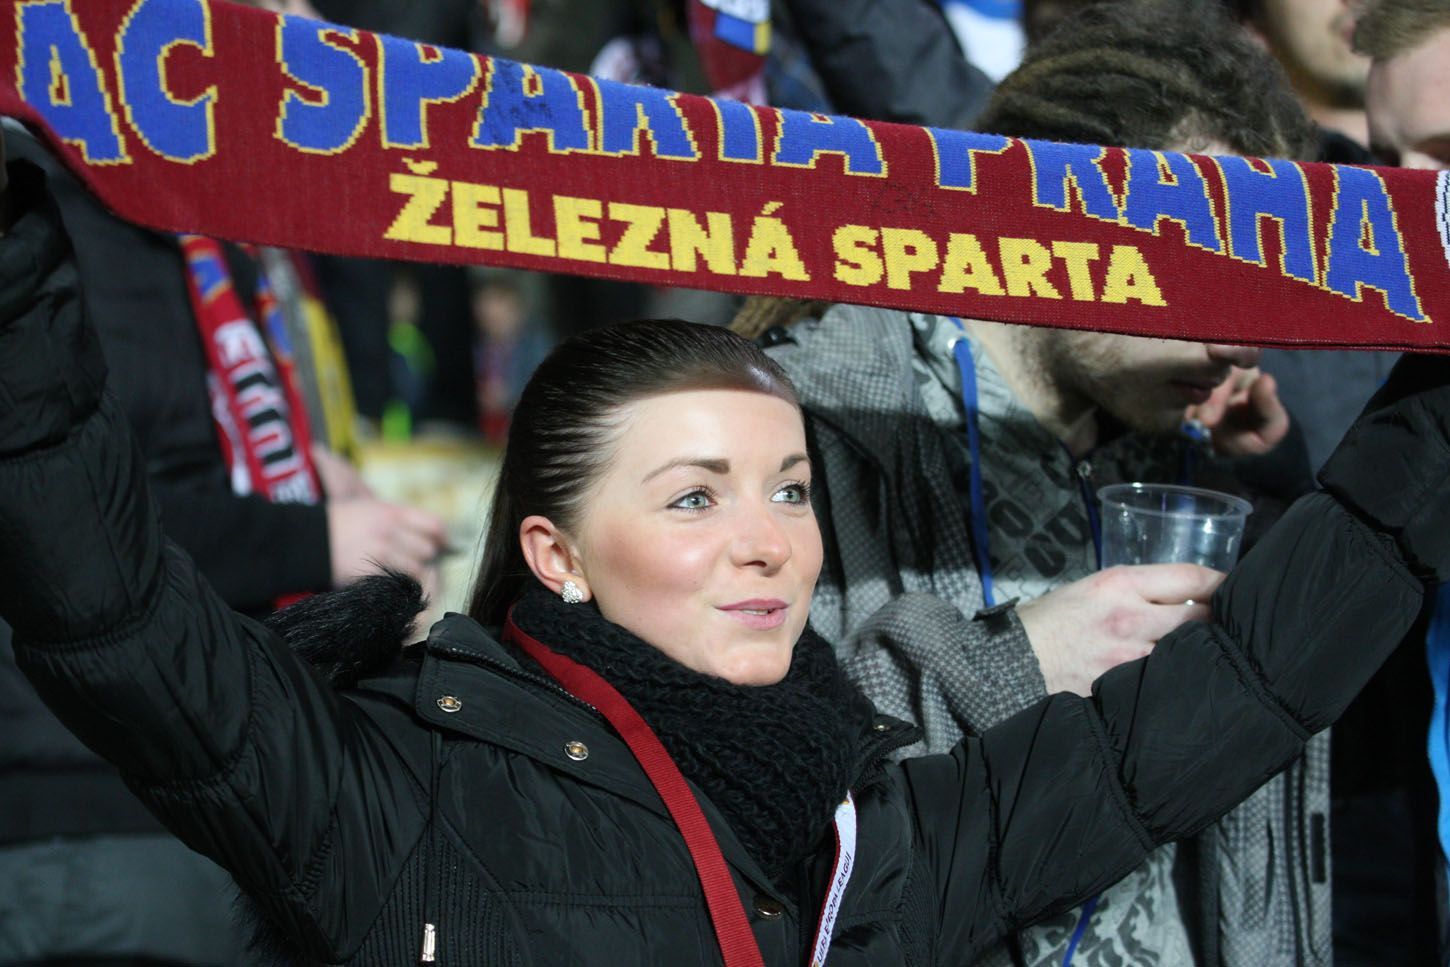 Sparta - Plzeň (sparťanská fanynka)